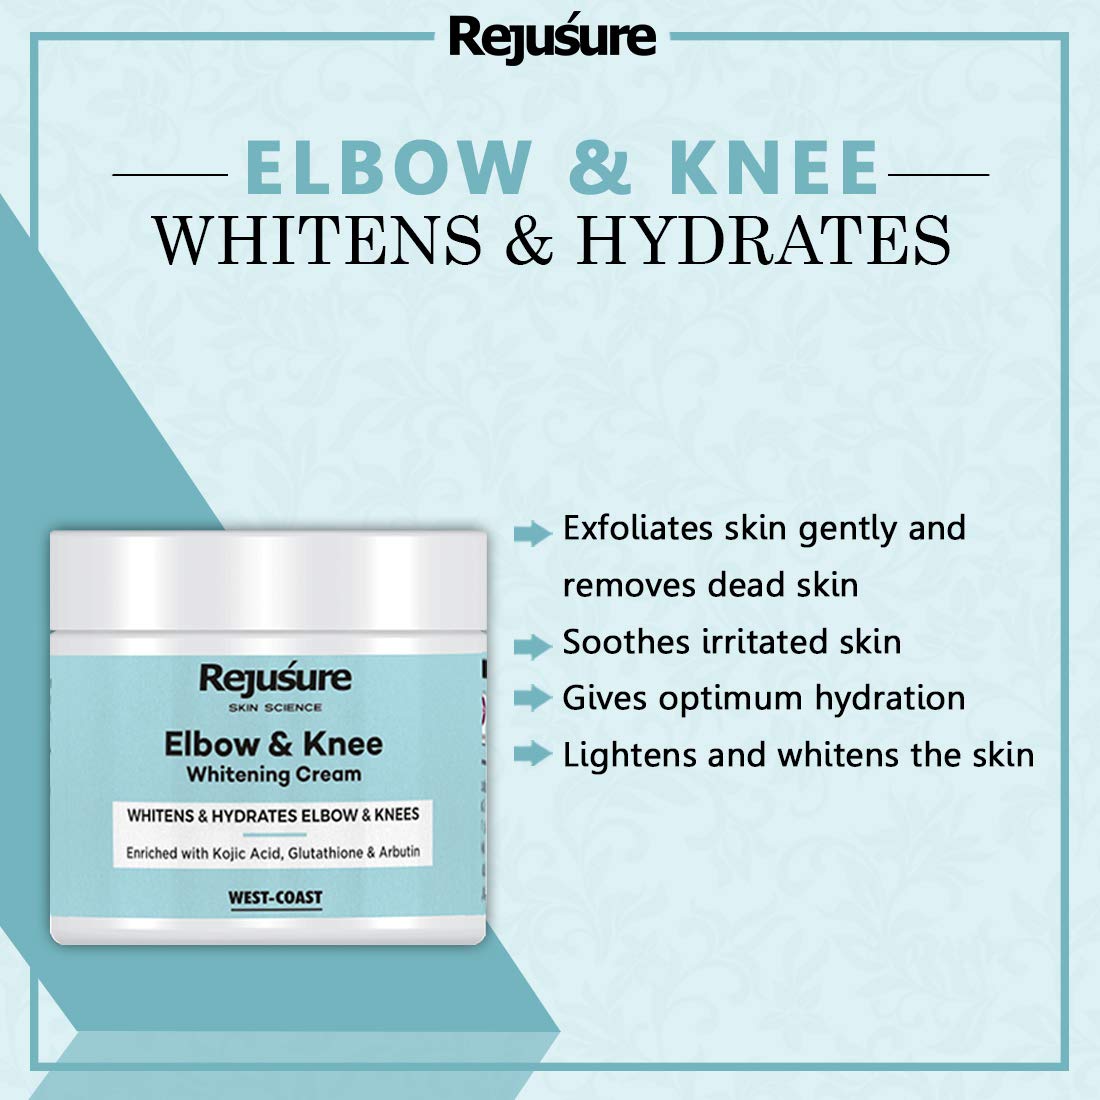 Rejusure Elbow & Knee Lightening Cream – Lightens & Hydrates Elbow & Knees – 50 gm (Pack of 3)